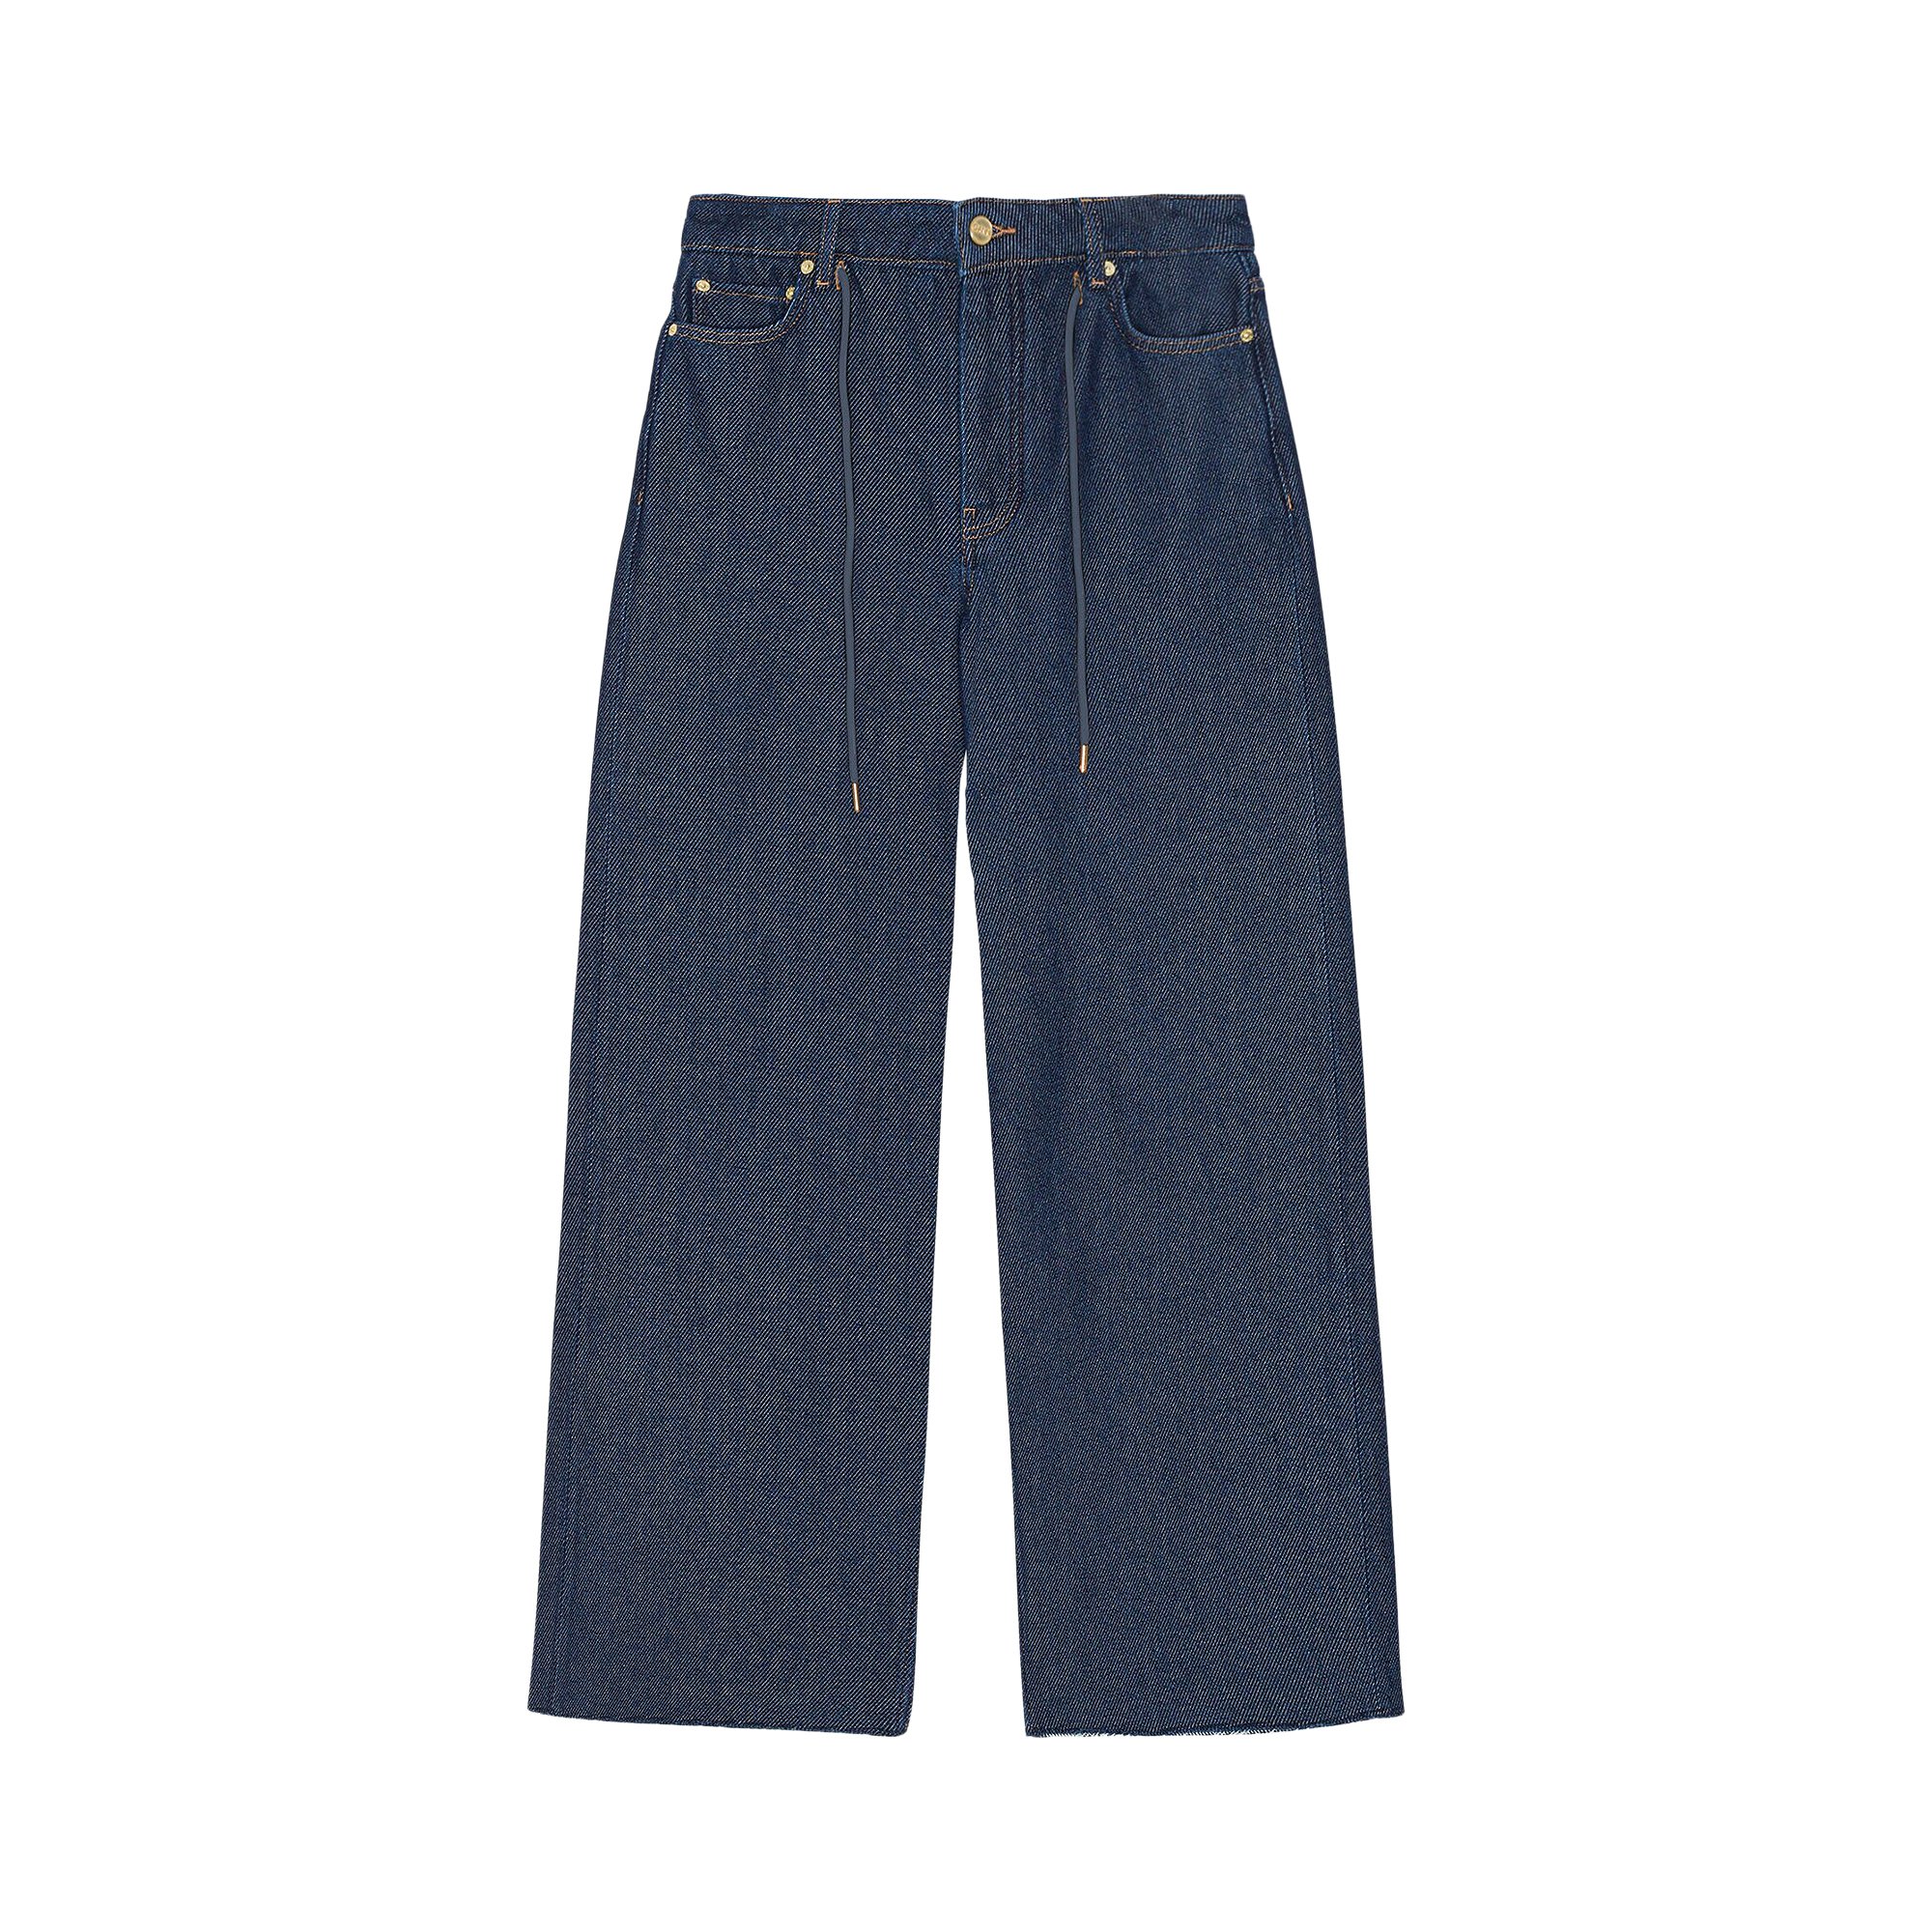 Buy GANNI Heavy Denim Wide Drawstring Jeans 'Rinse' - J1353 RINS